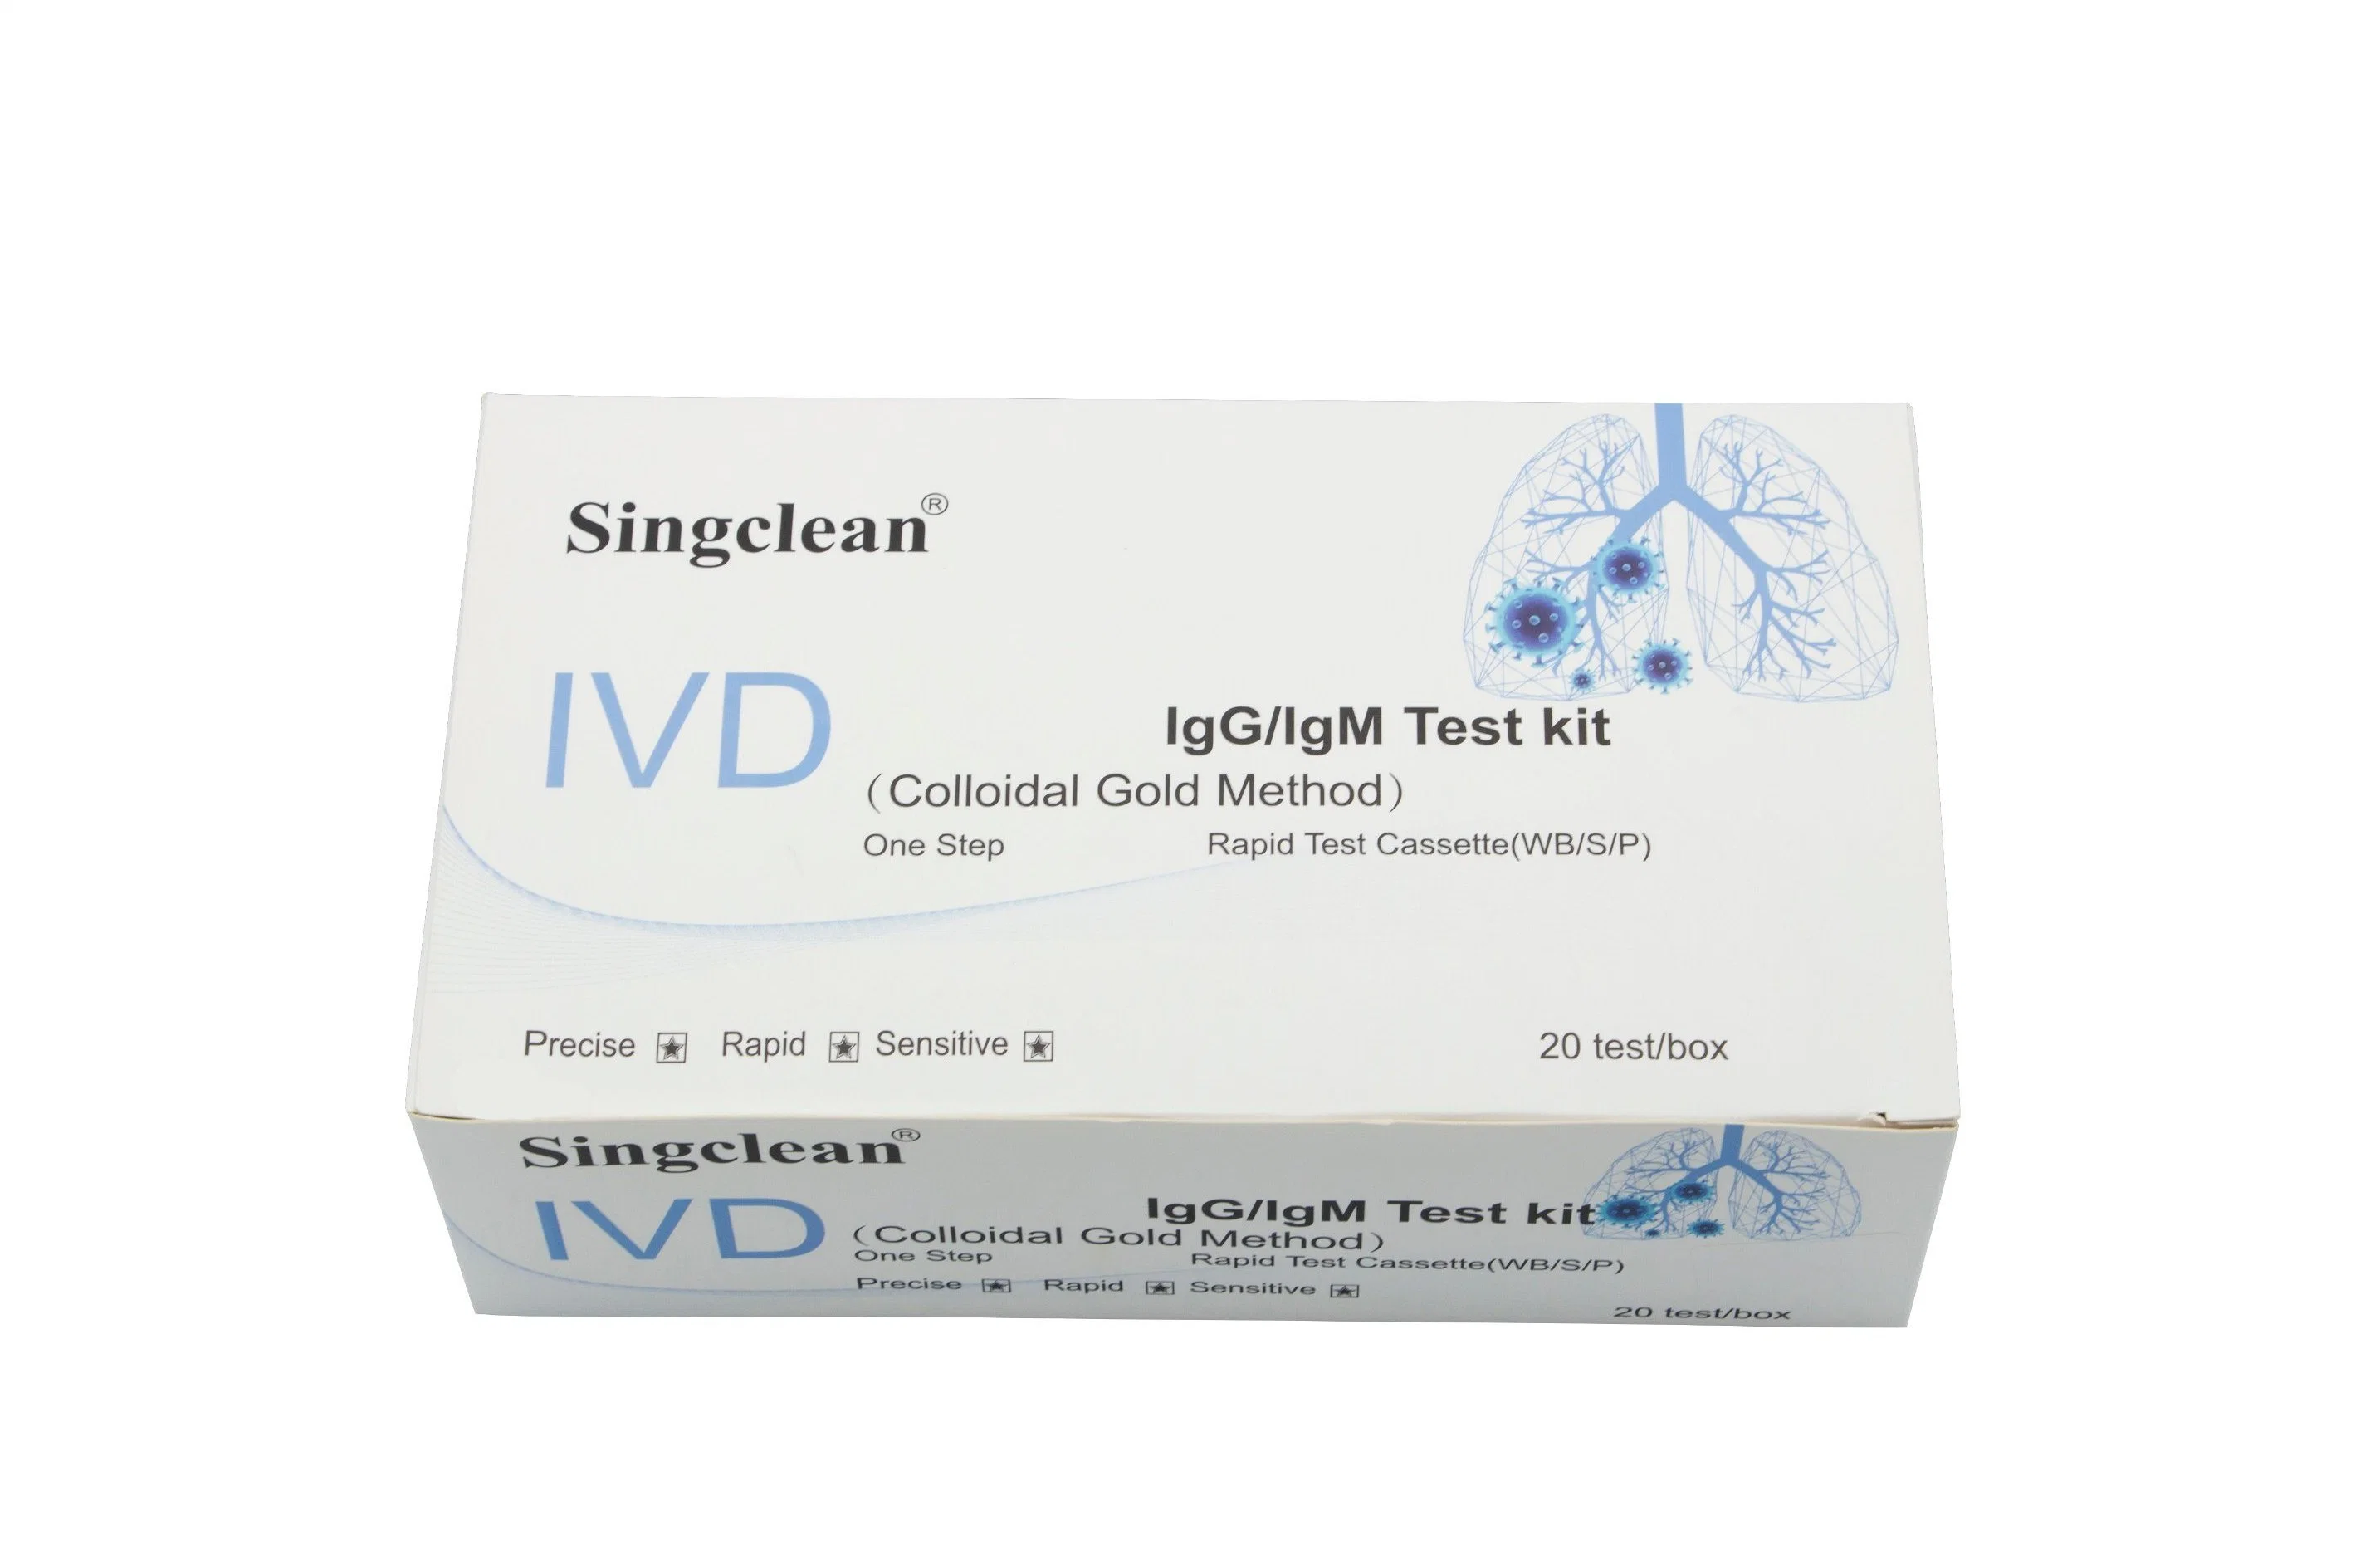 Singclean Igg/Igm Rapid Test Kit Antibody Test with CE Mark